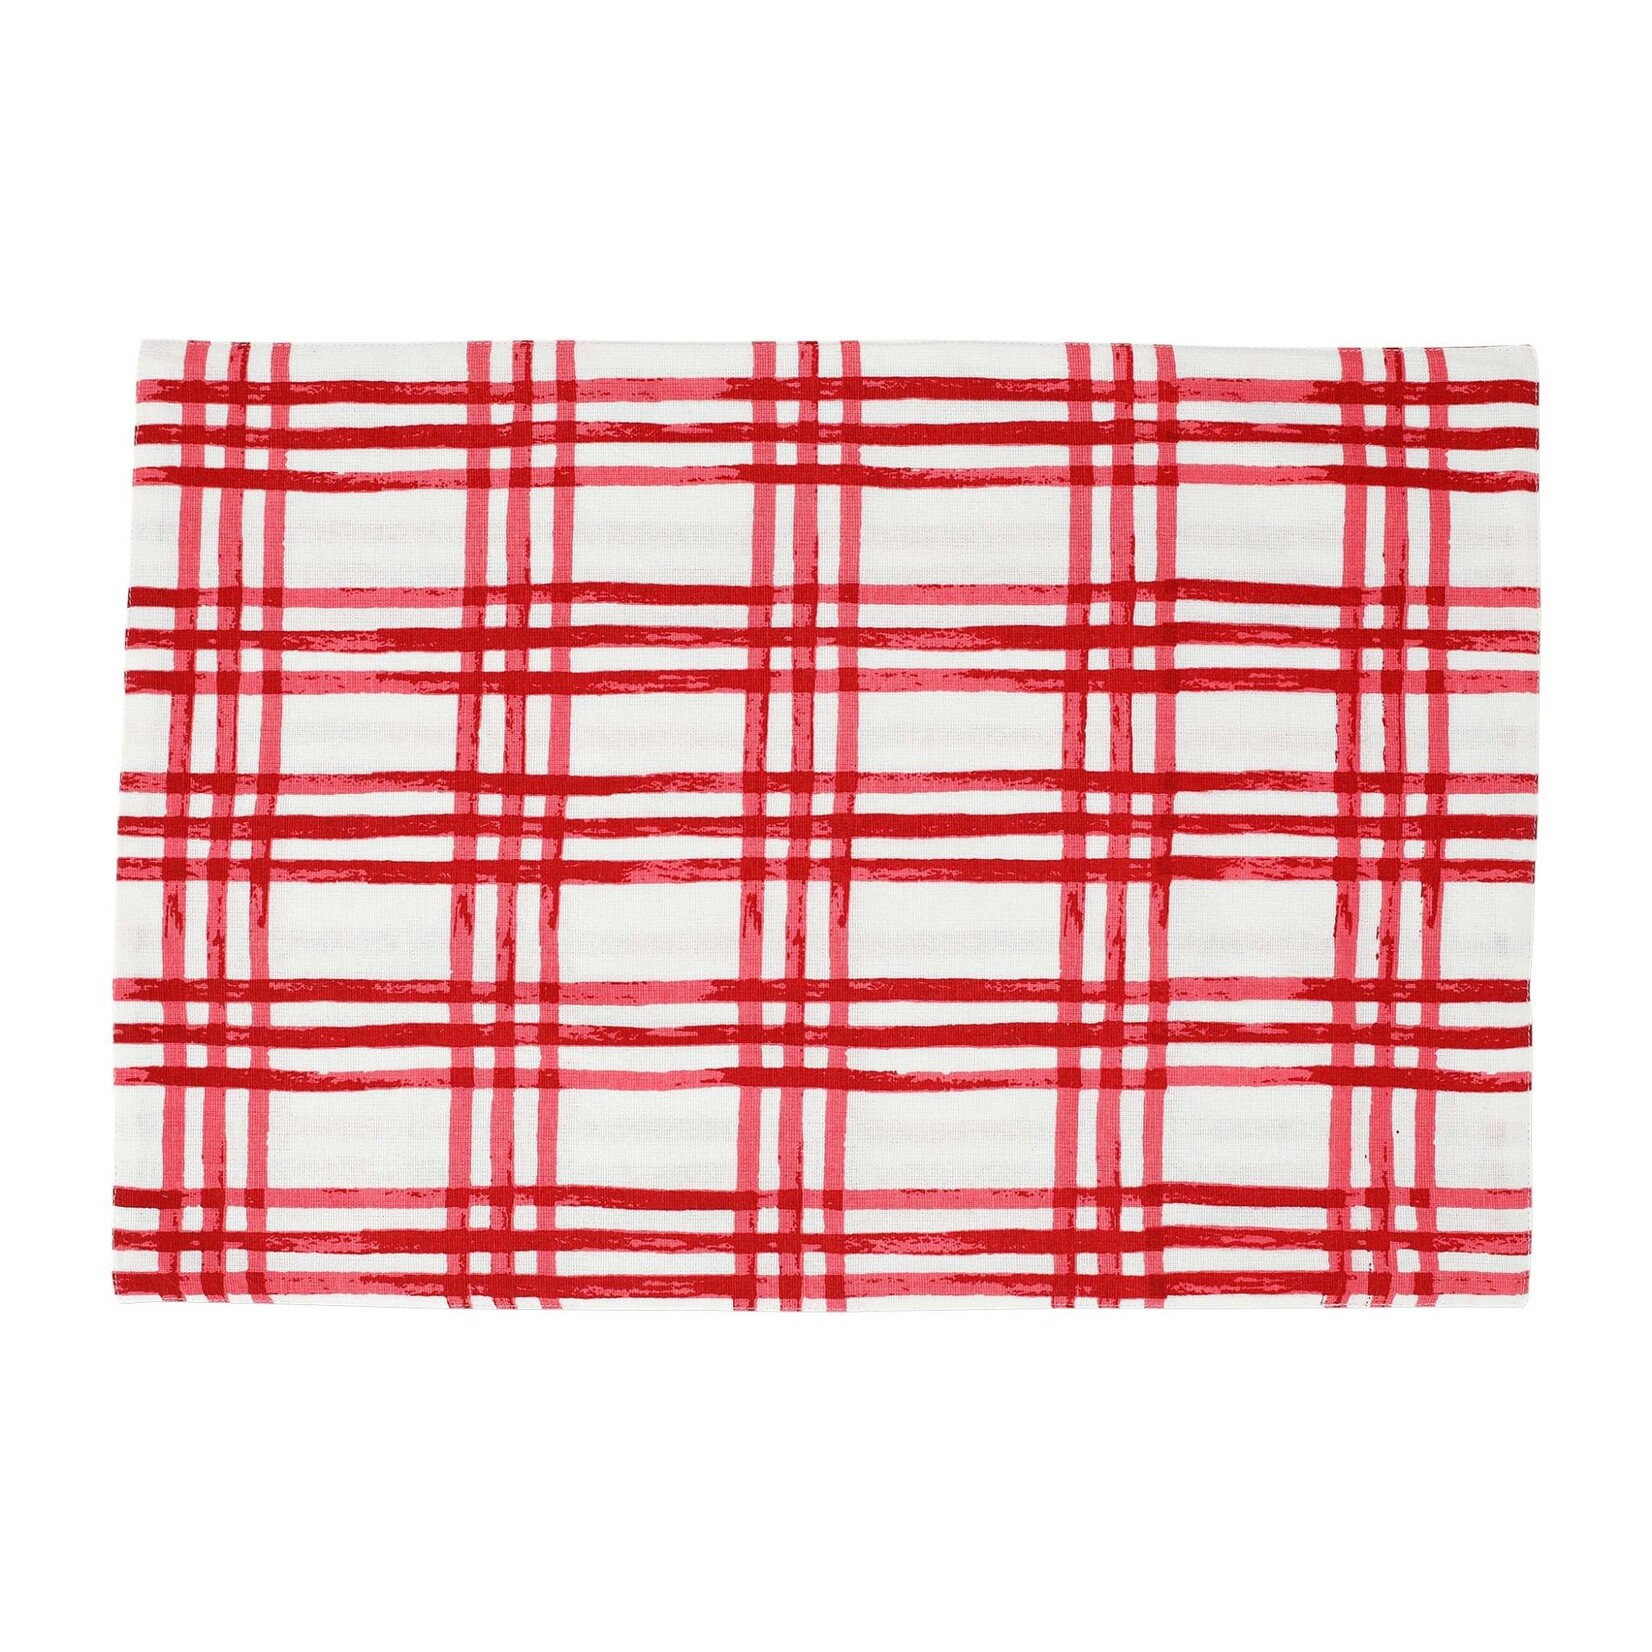 VIETRI Bohemian Linens Plaid Red/White Placemats - Set of 4